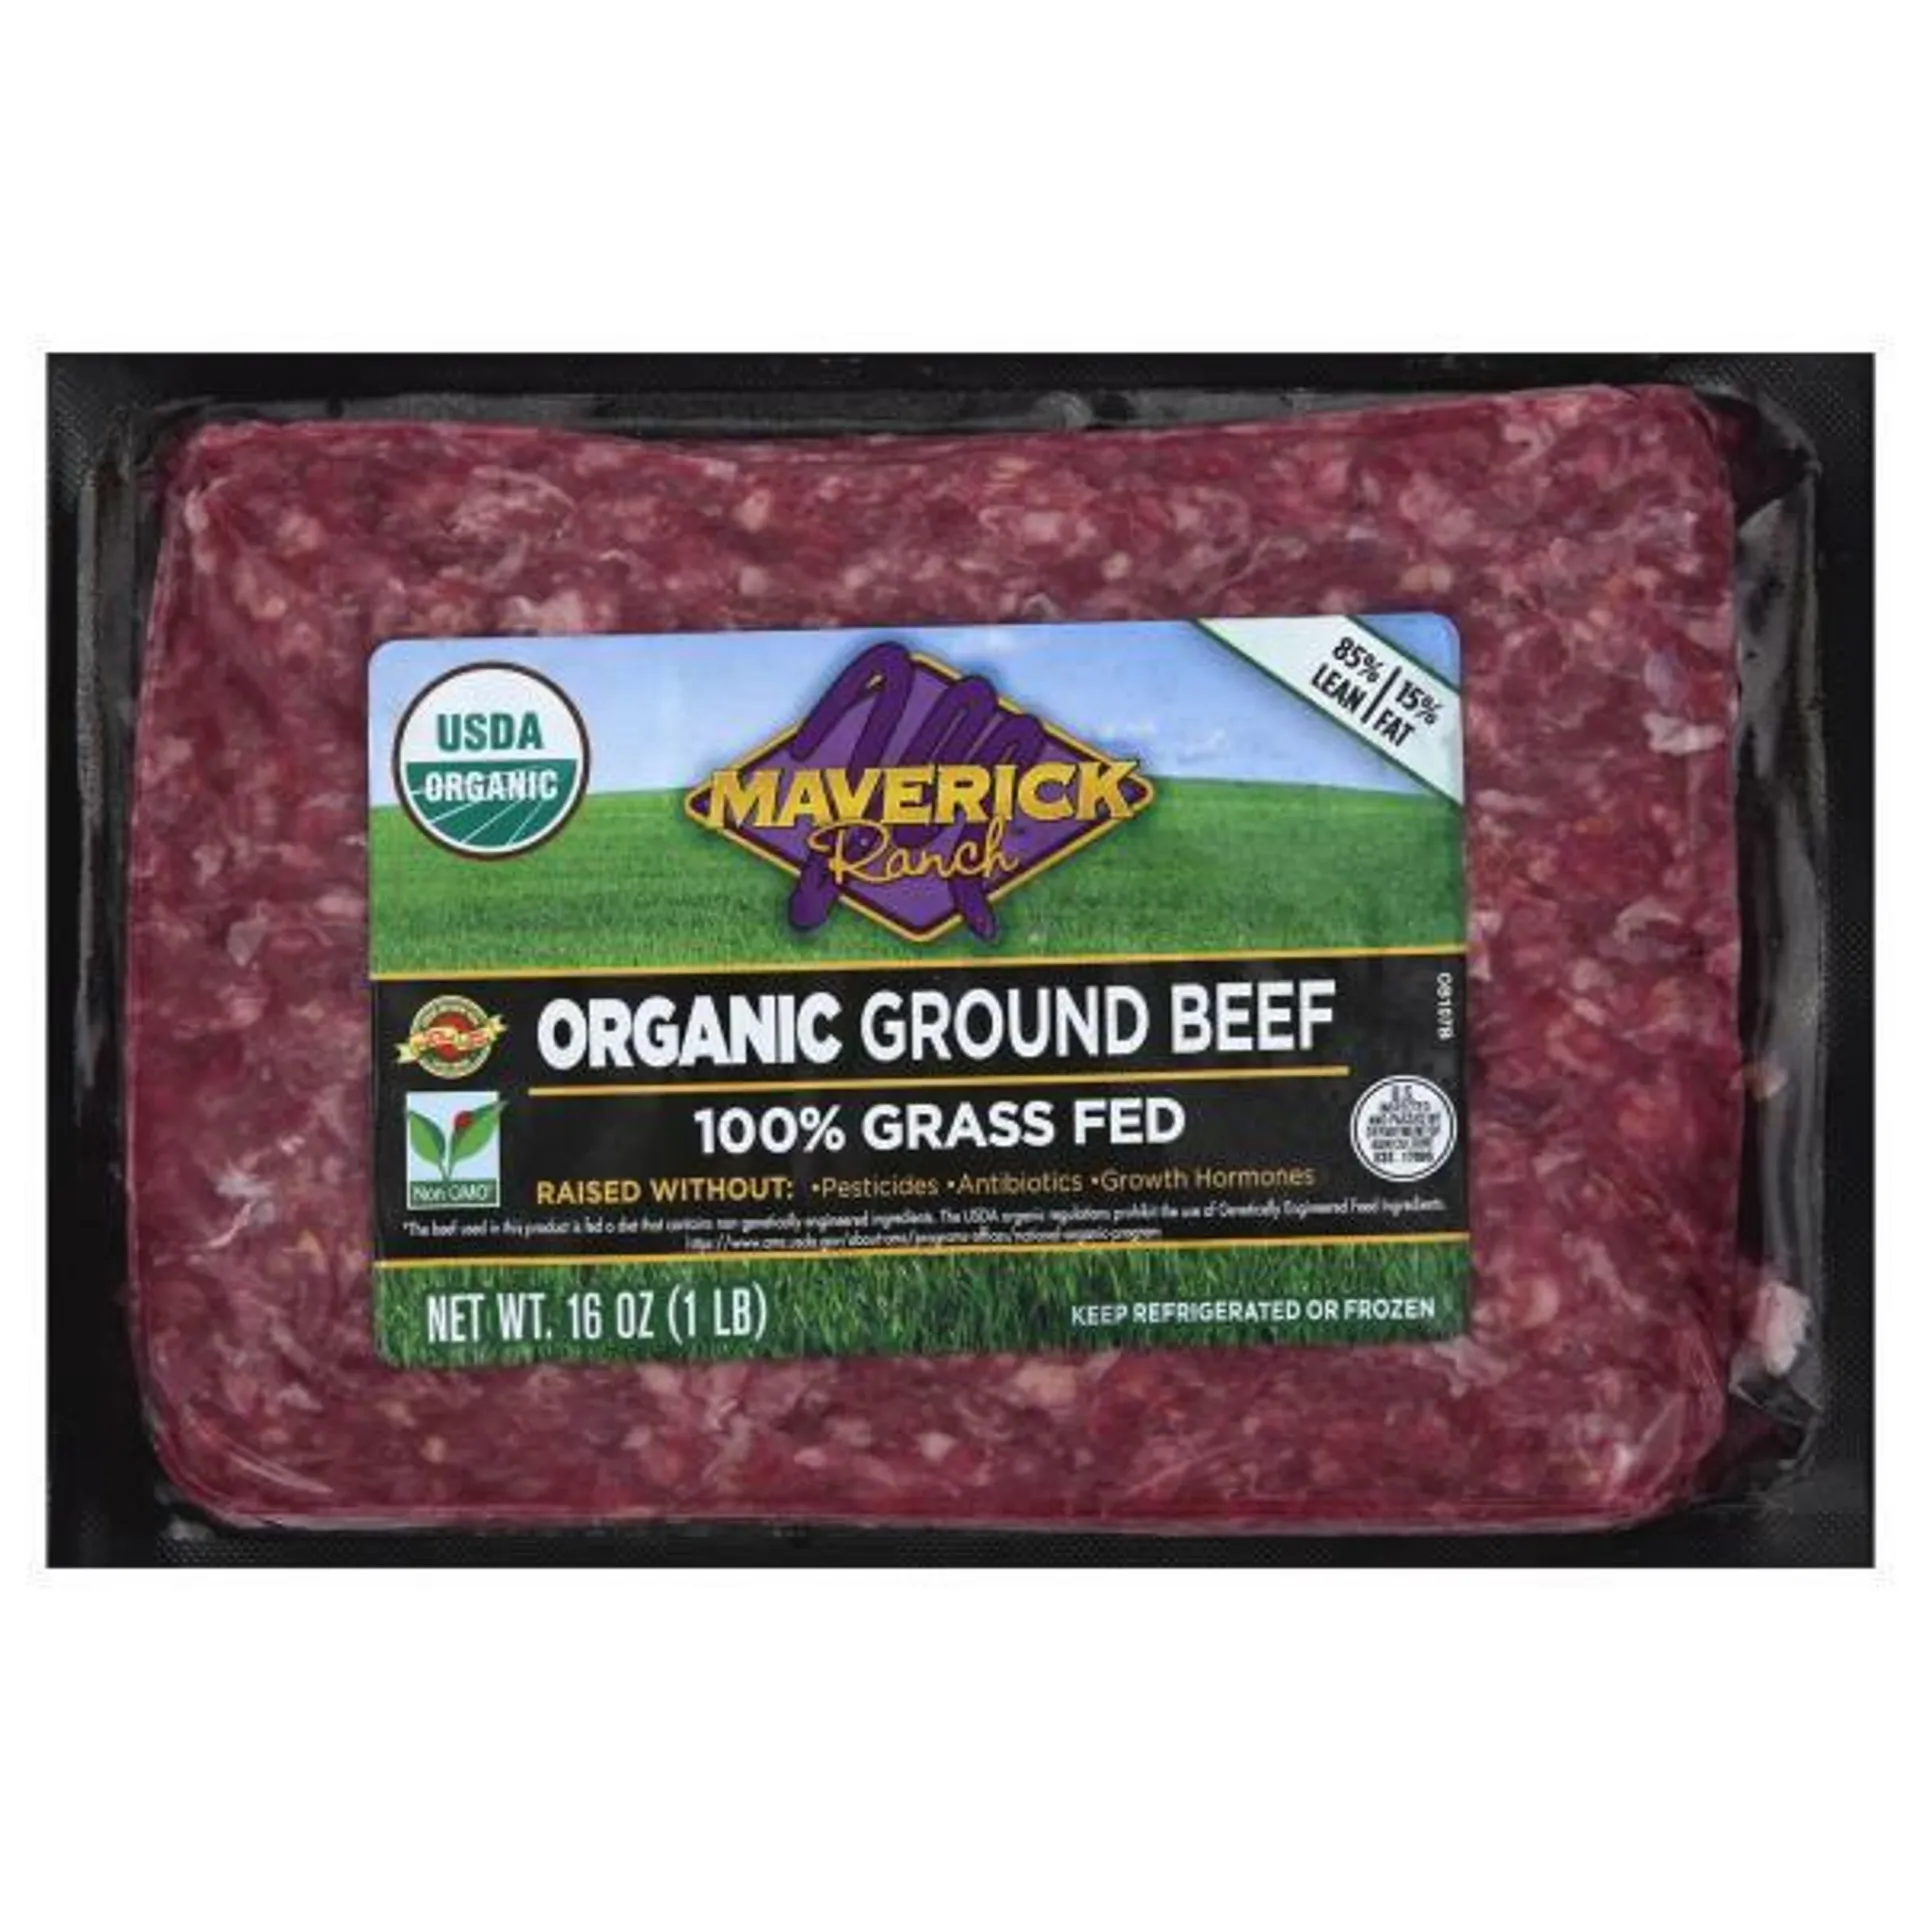 Maverick Ranch Beef, Ground, Organic, 85/15